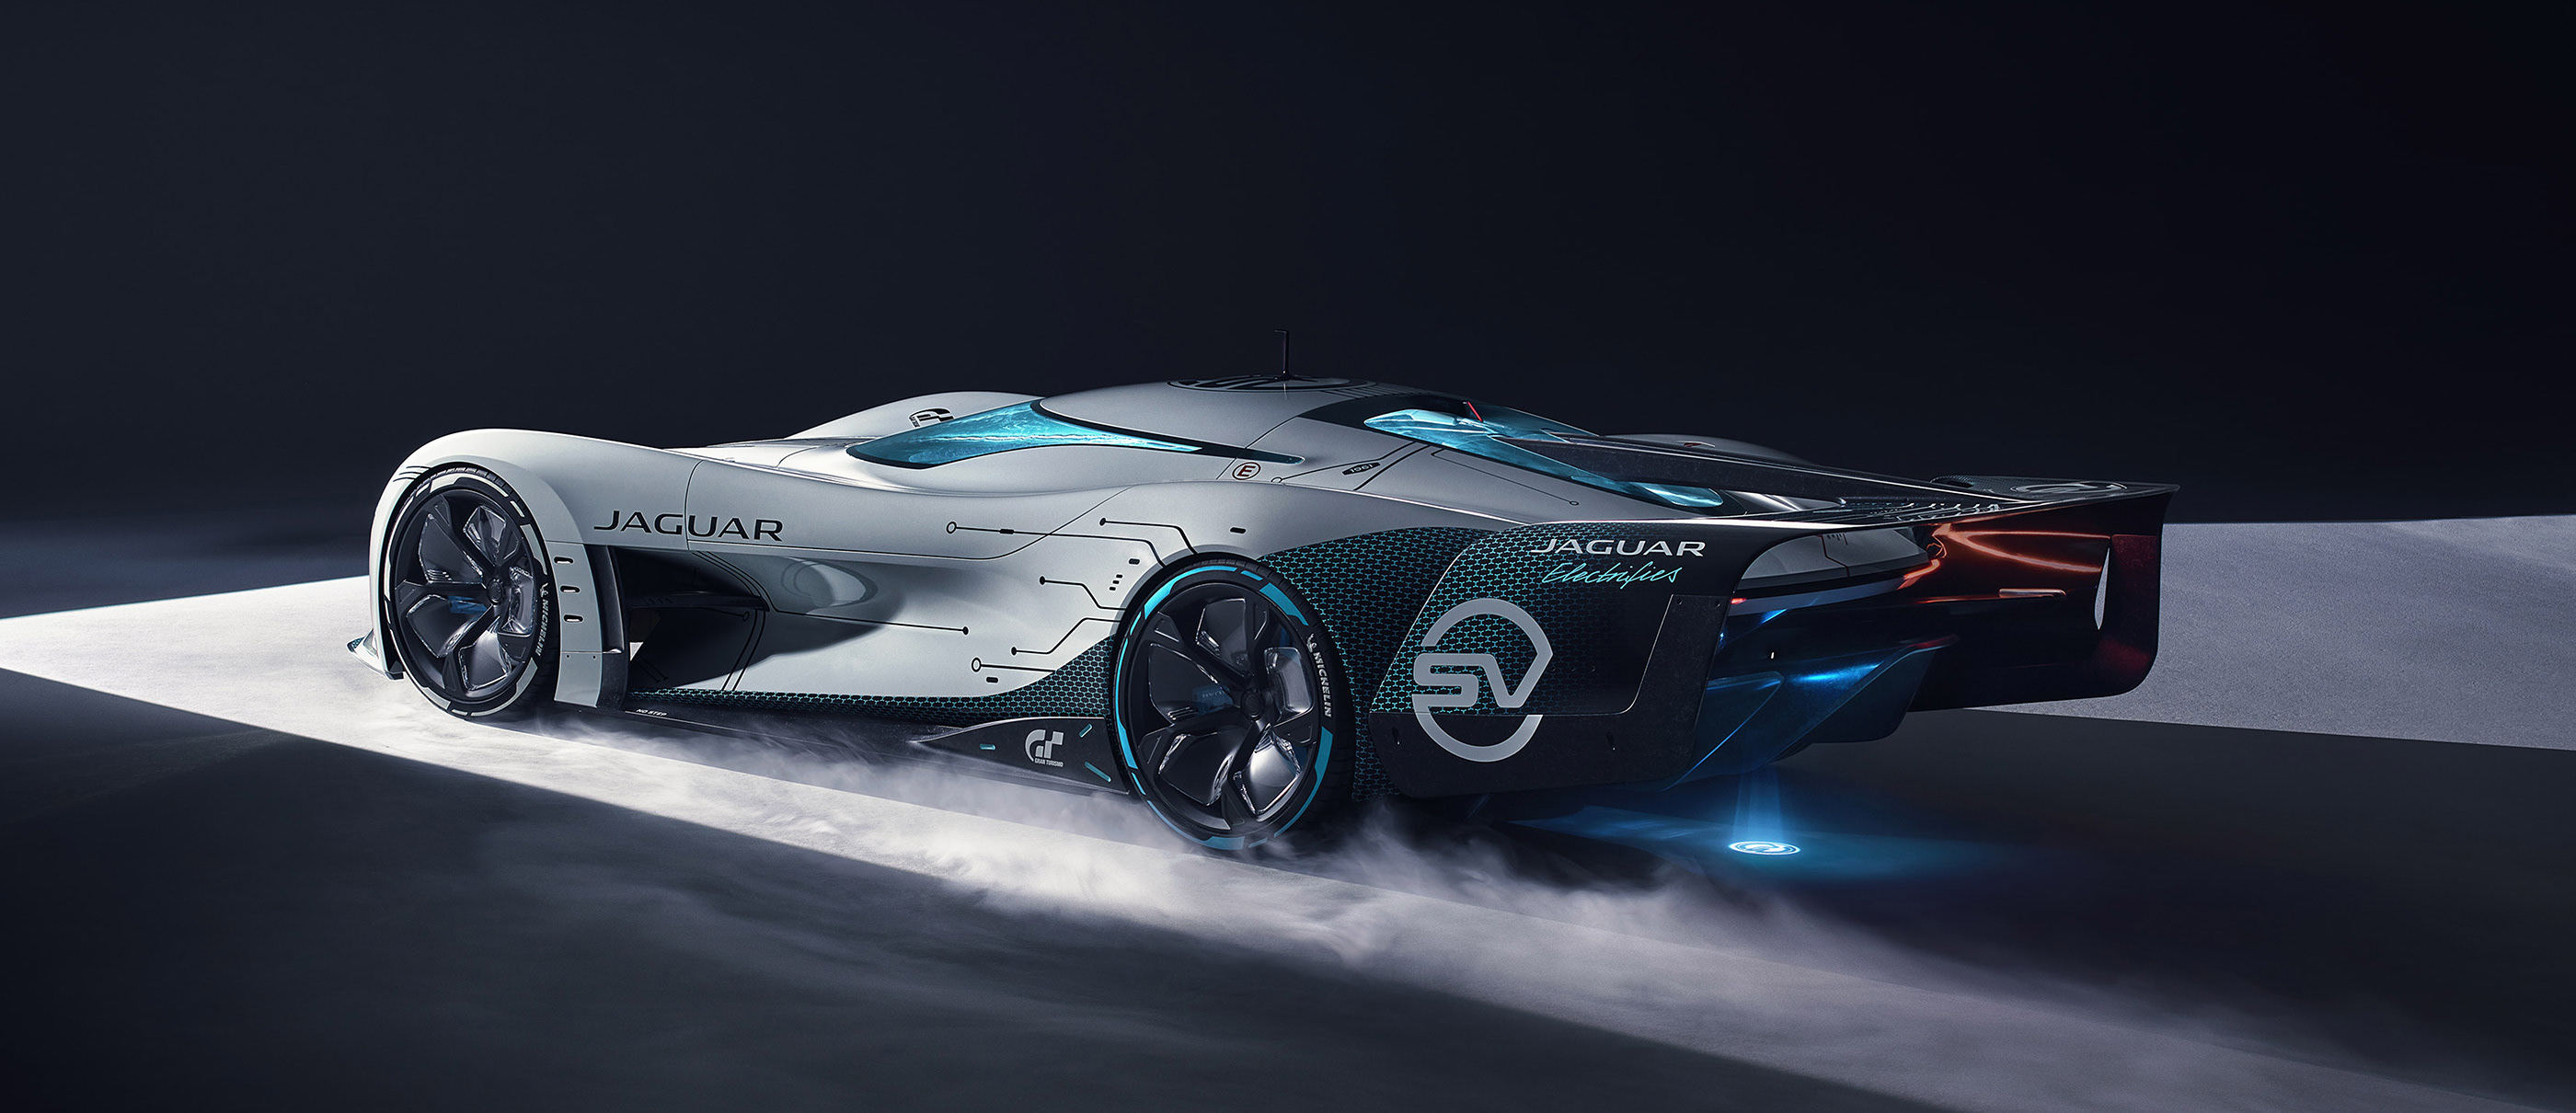 Jaguar Car Jaguar Vision GT SV Behance Car Vehicle Futuristic Concept Cars CGi Vision Gran Turismo S 2800x1210